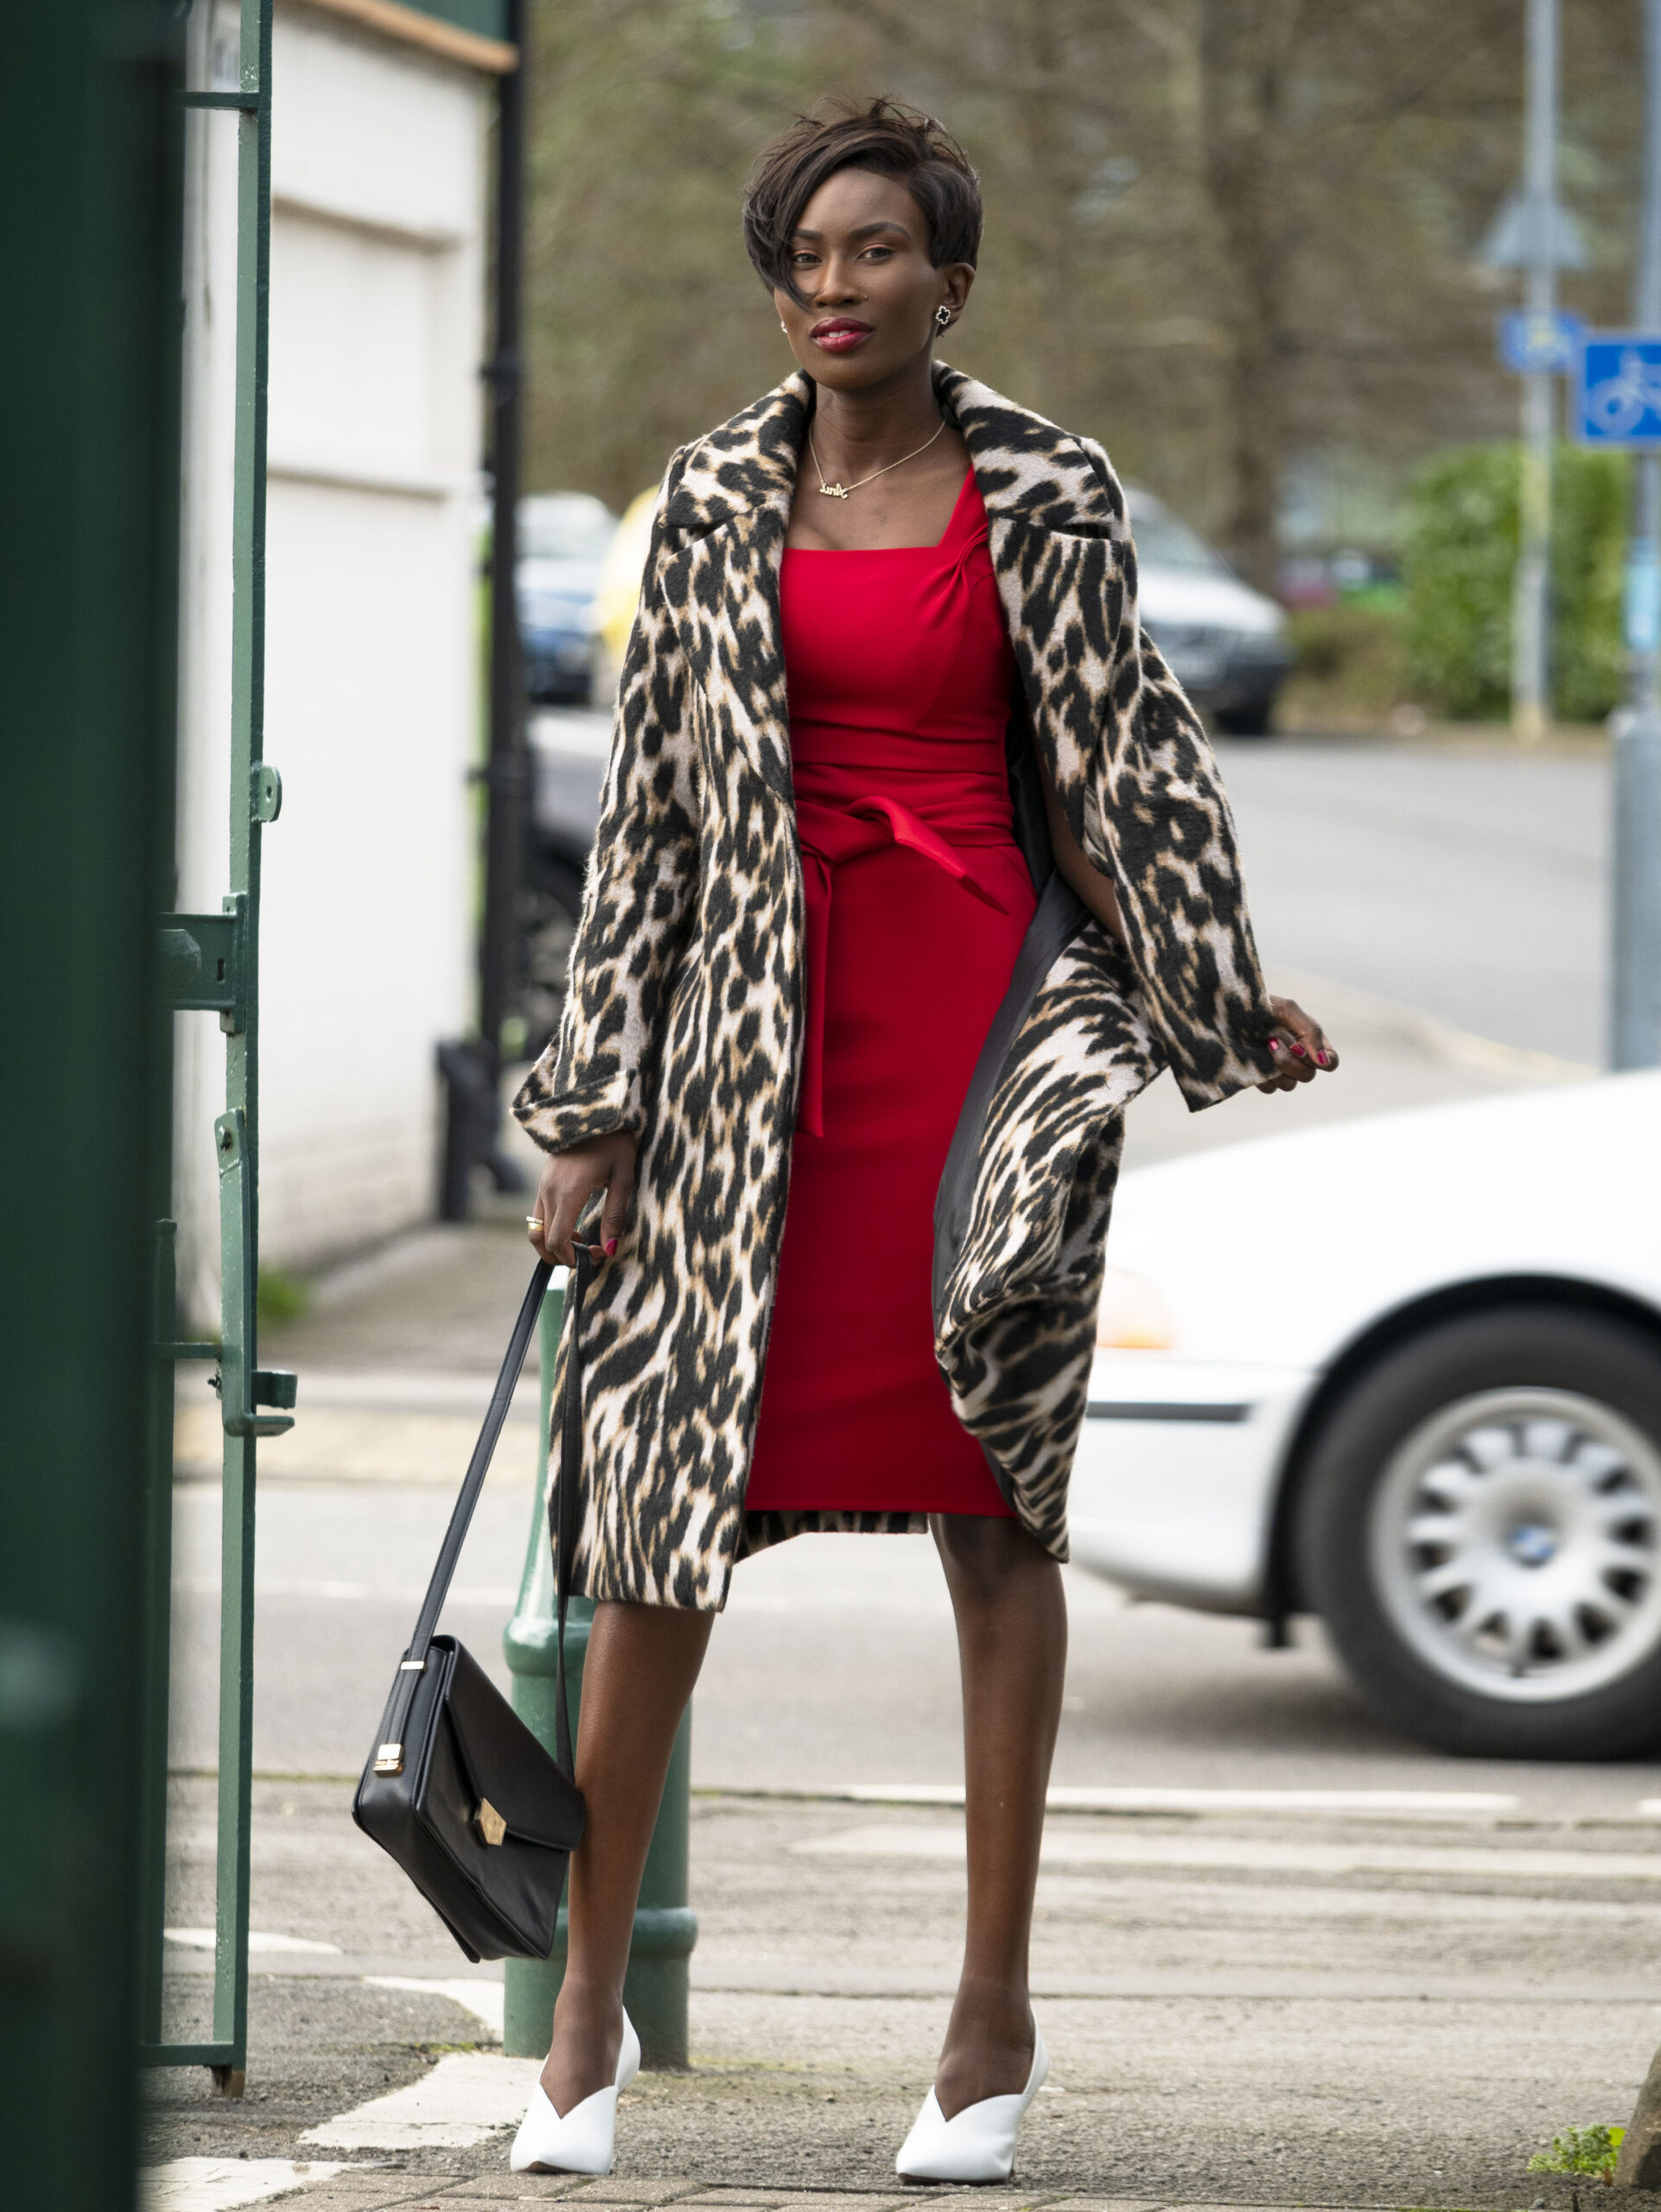 Red dress & Leopard coat